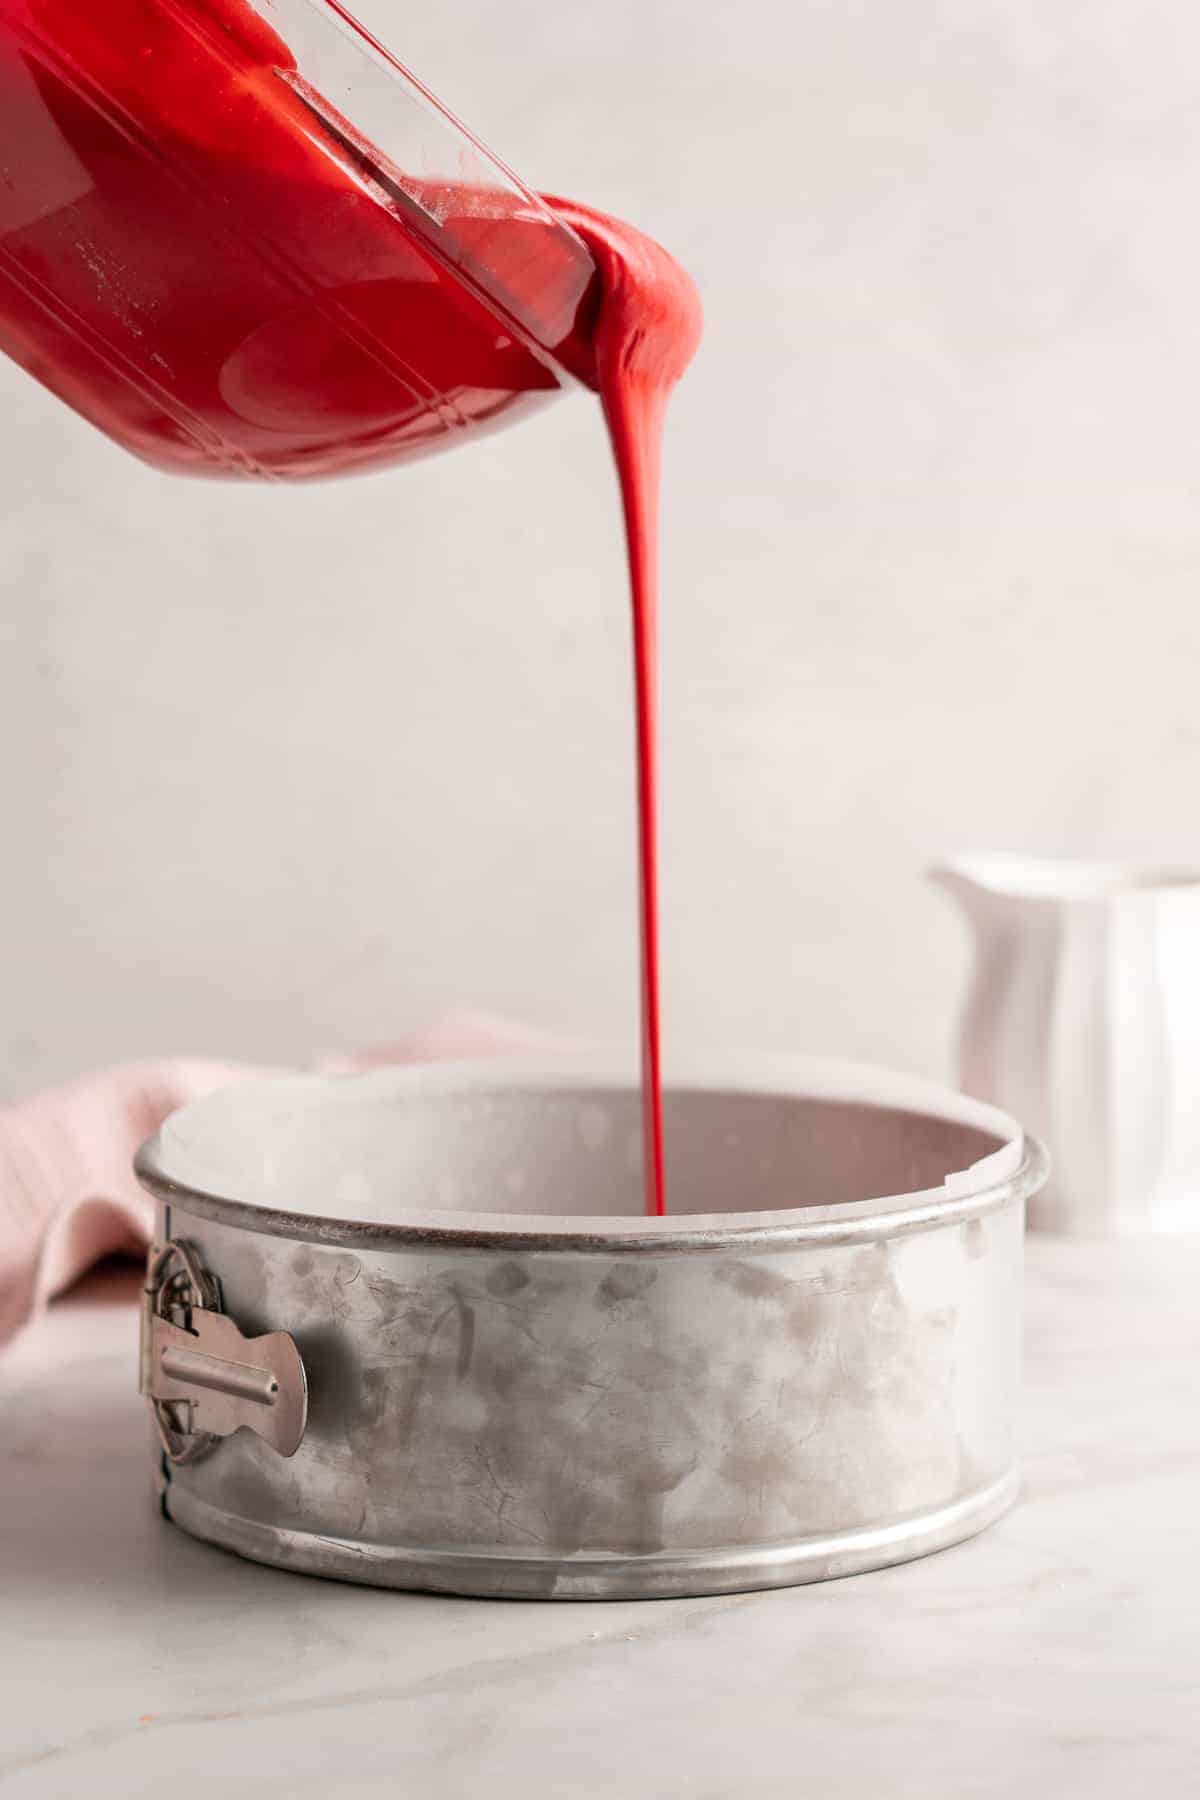 Pouring red velvet cake batter into lined cake pan